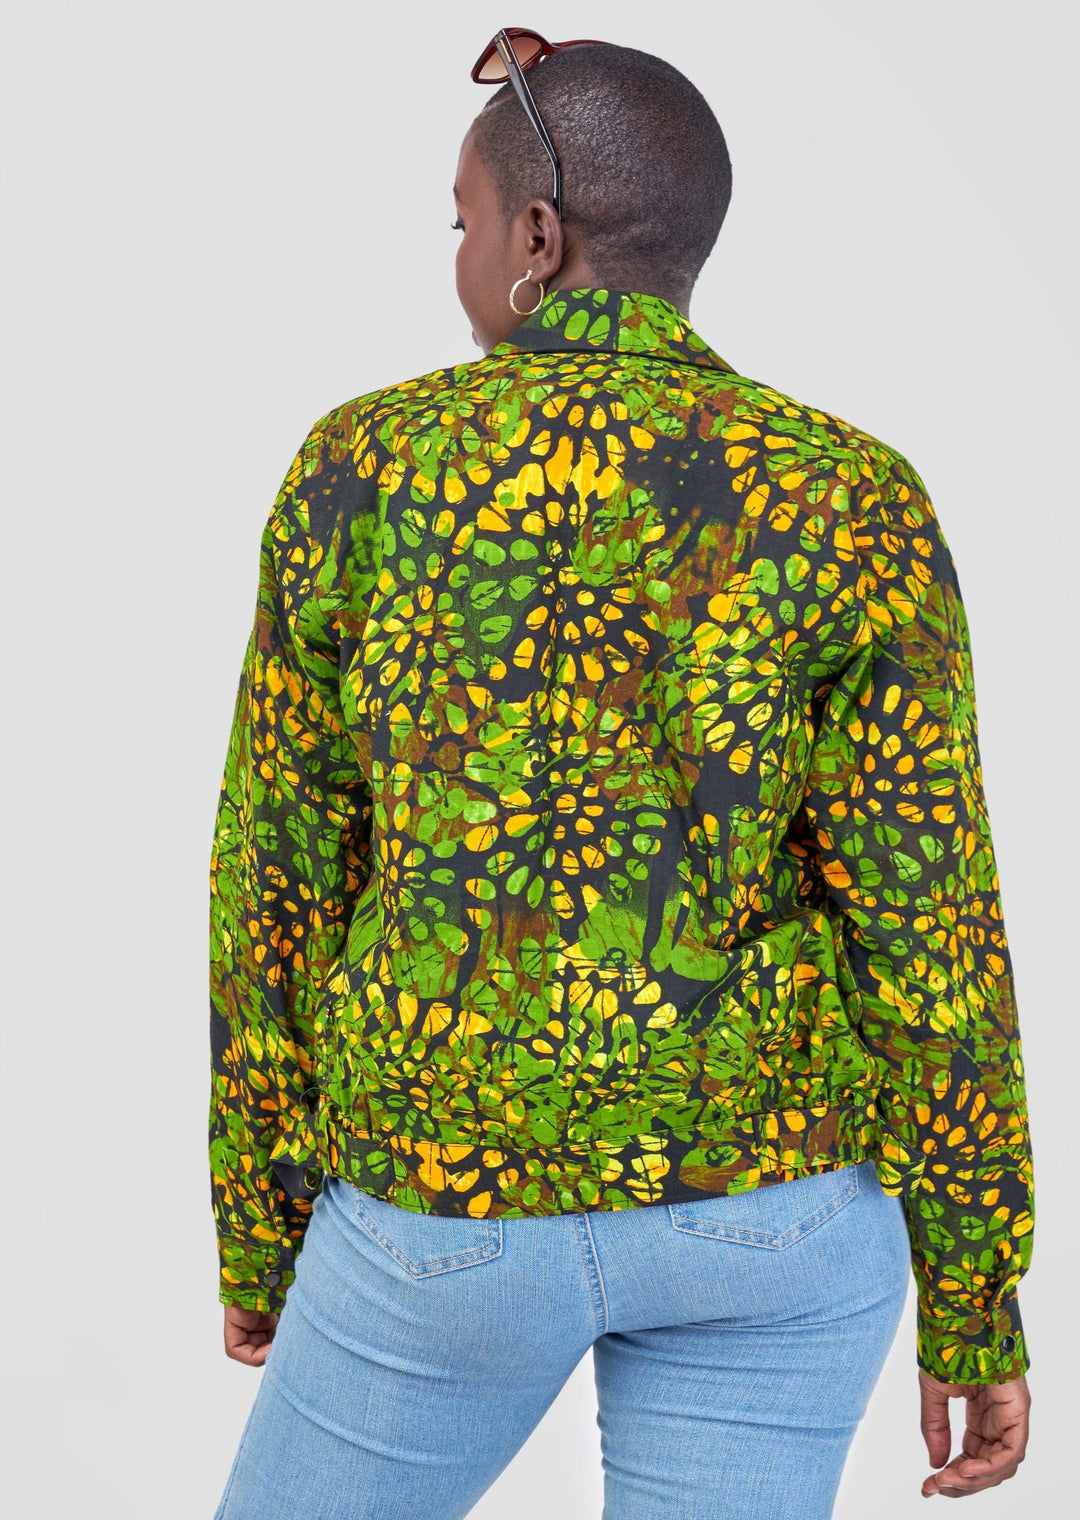 Button-up jacket with collar ‚Bustani‘ - mikono.africa Jacken aus Kenia bunte Bomberjacke Partyjacke faire sozial nachhaltig designed in Kenia